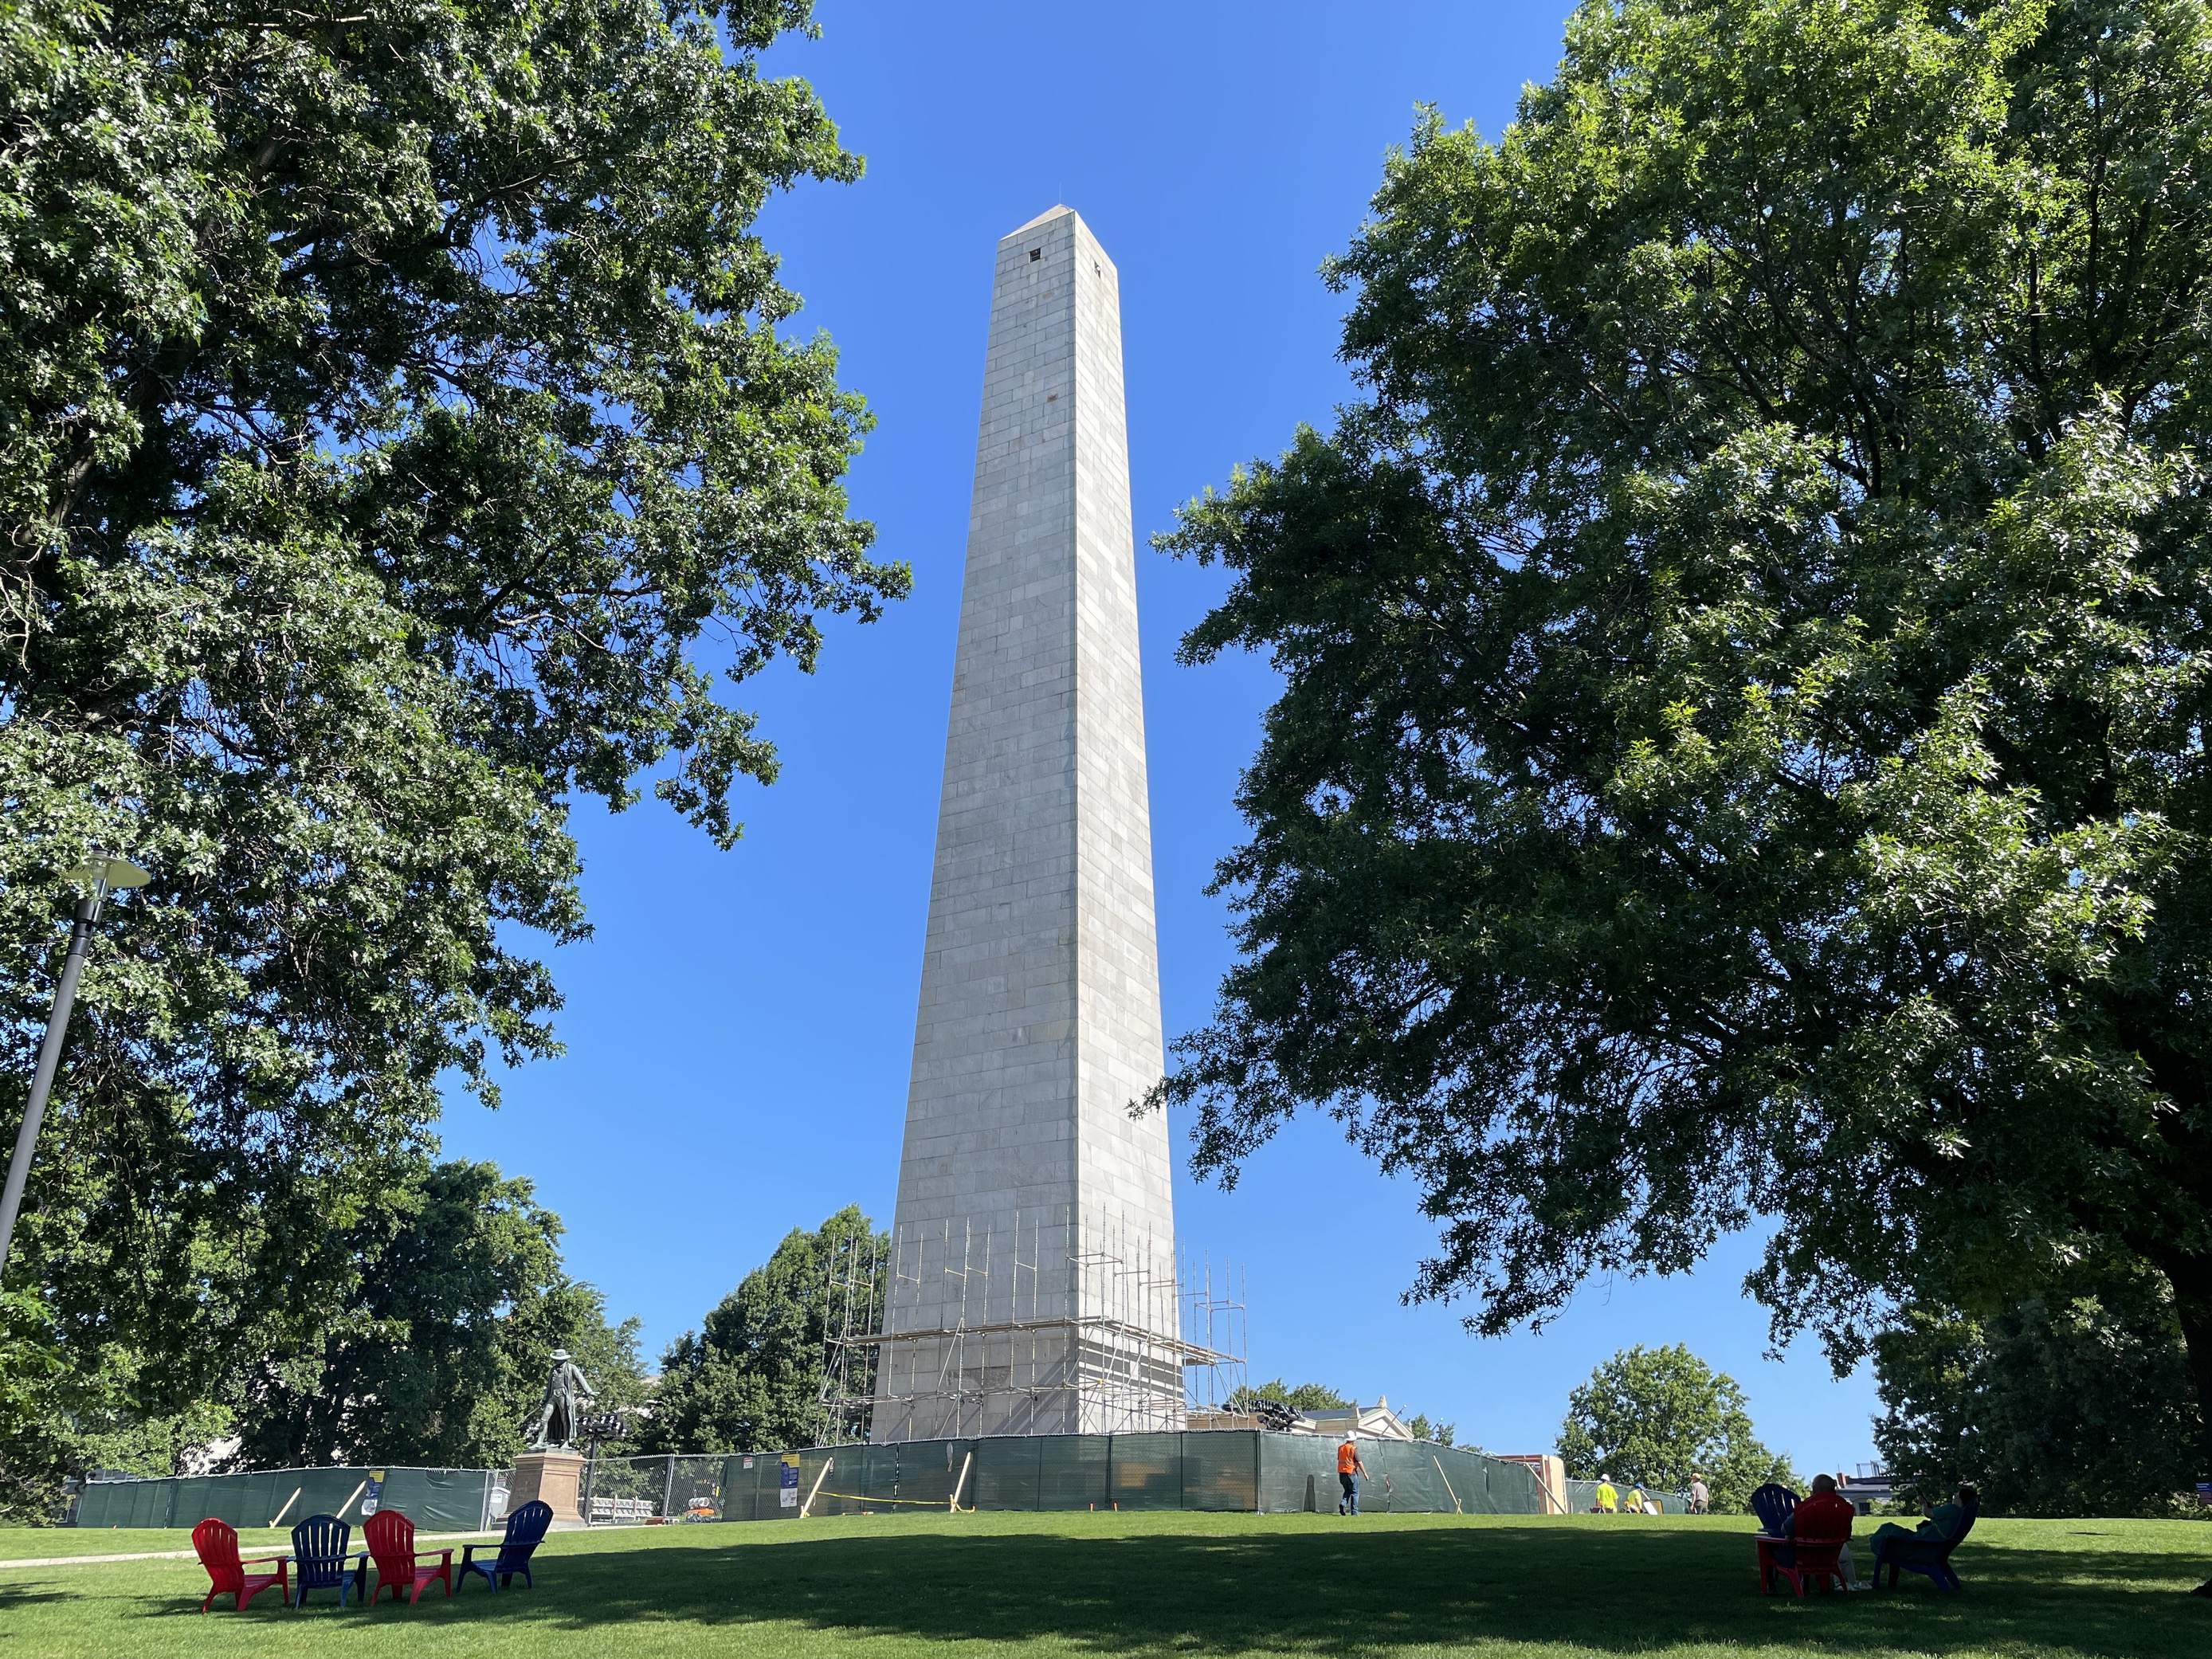 Bunker Hill - Boston National Historical Park (U.S. National Park Service)